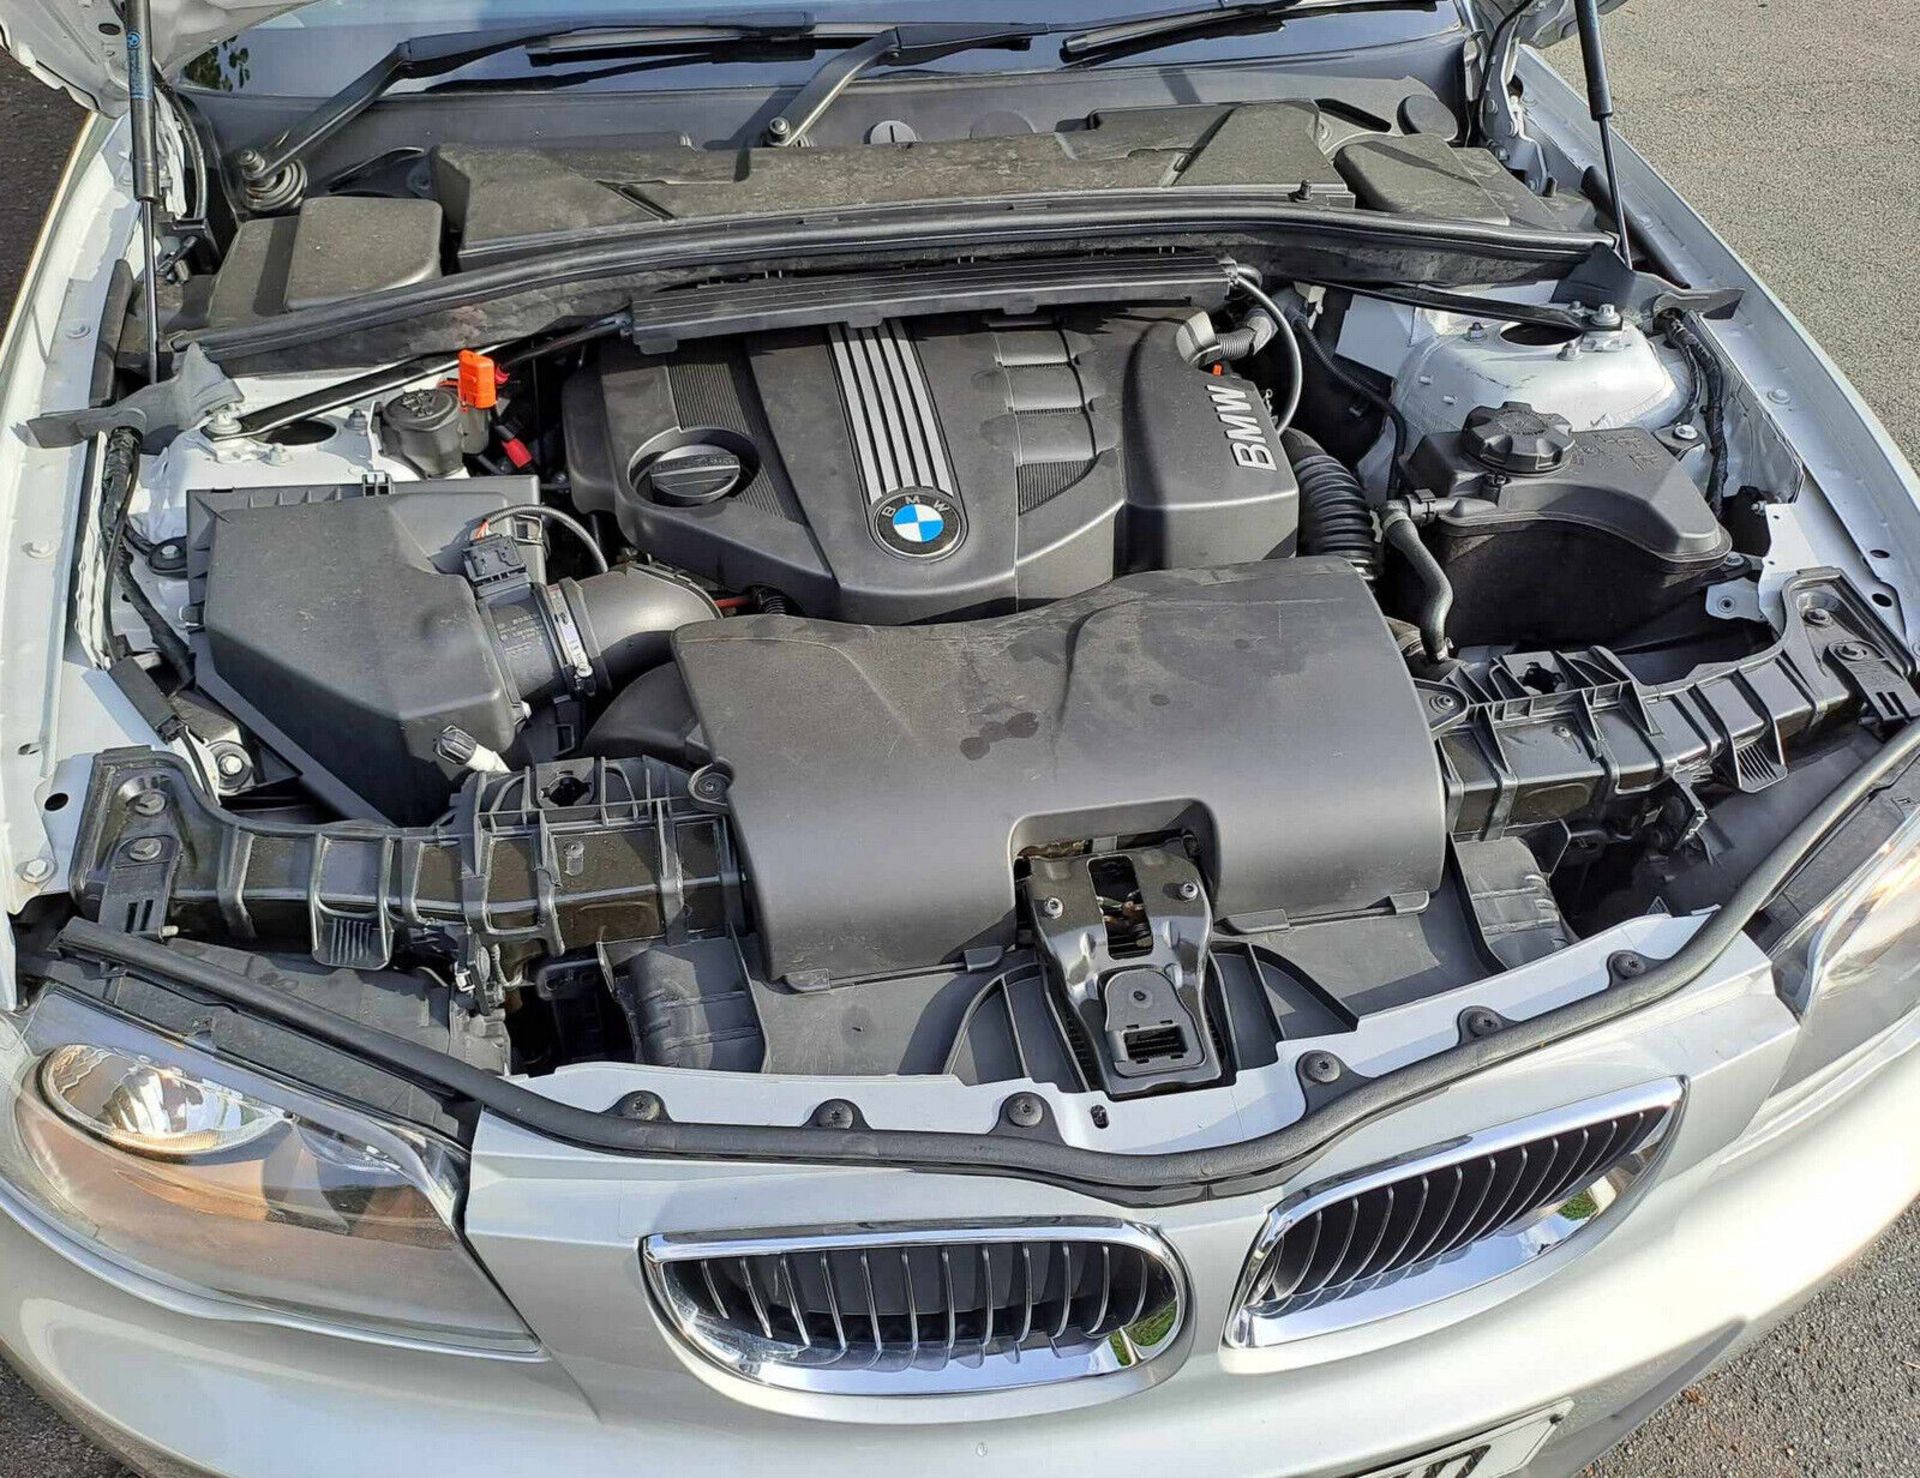 2011, BMW 1 Series - 116d M-Sport - Image 9 of 15